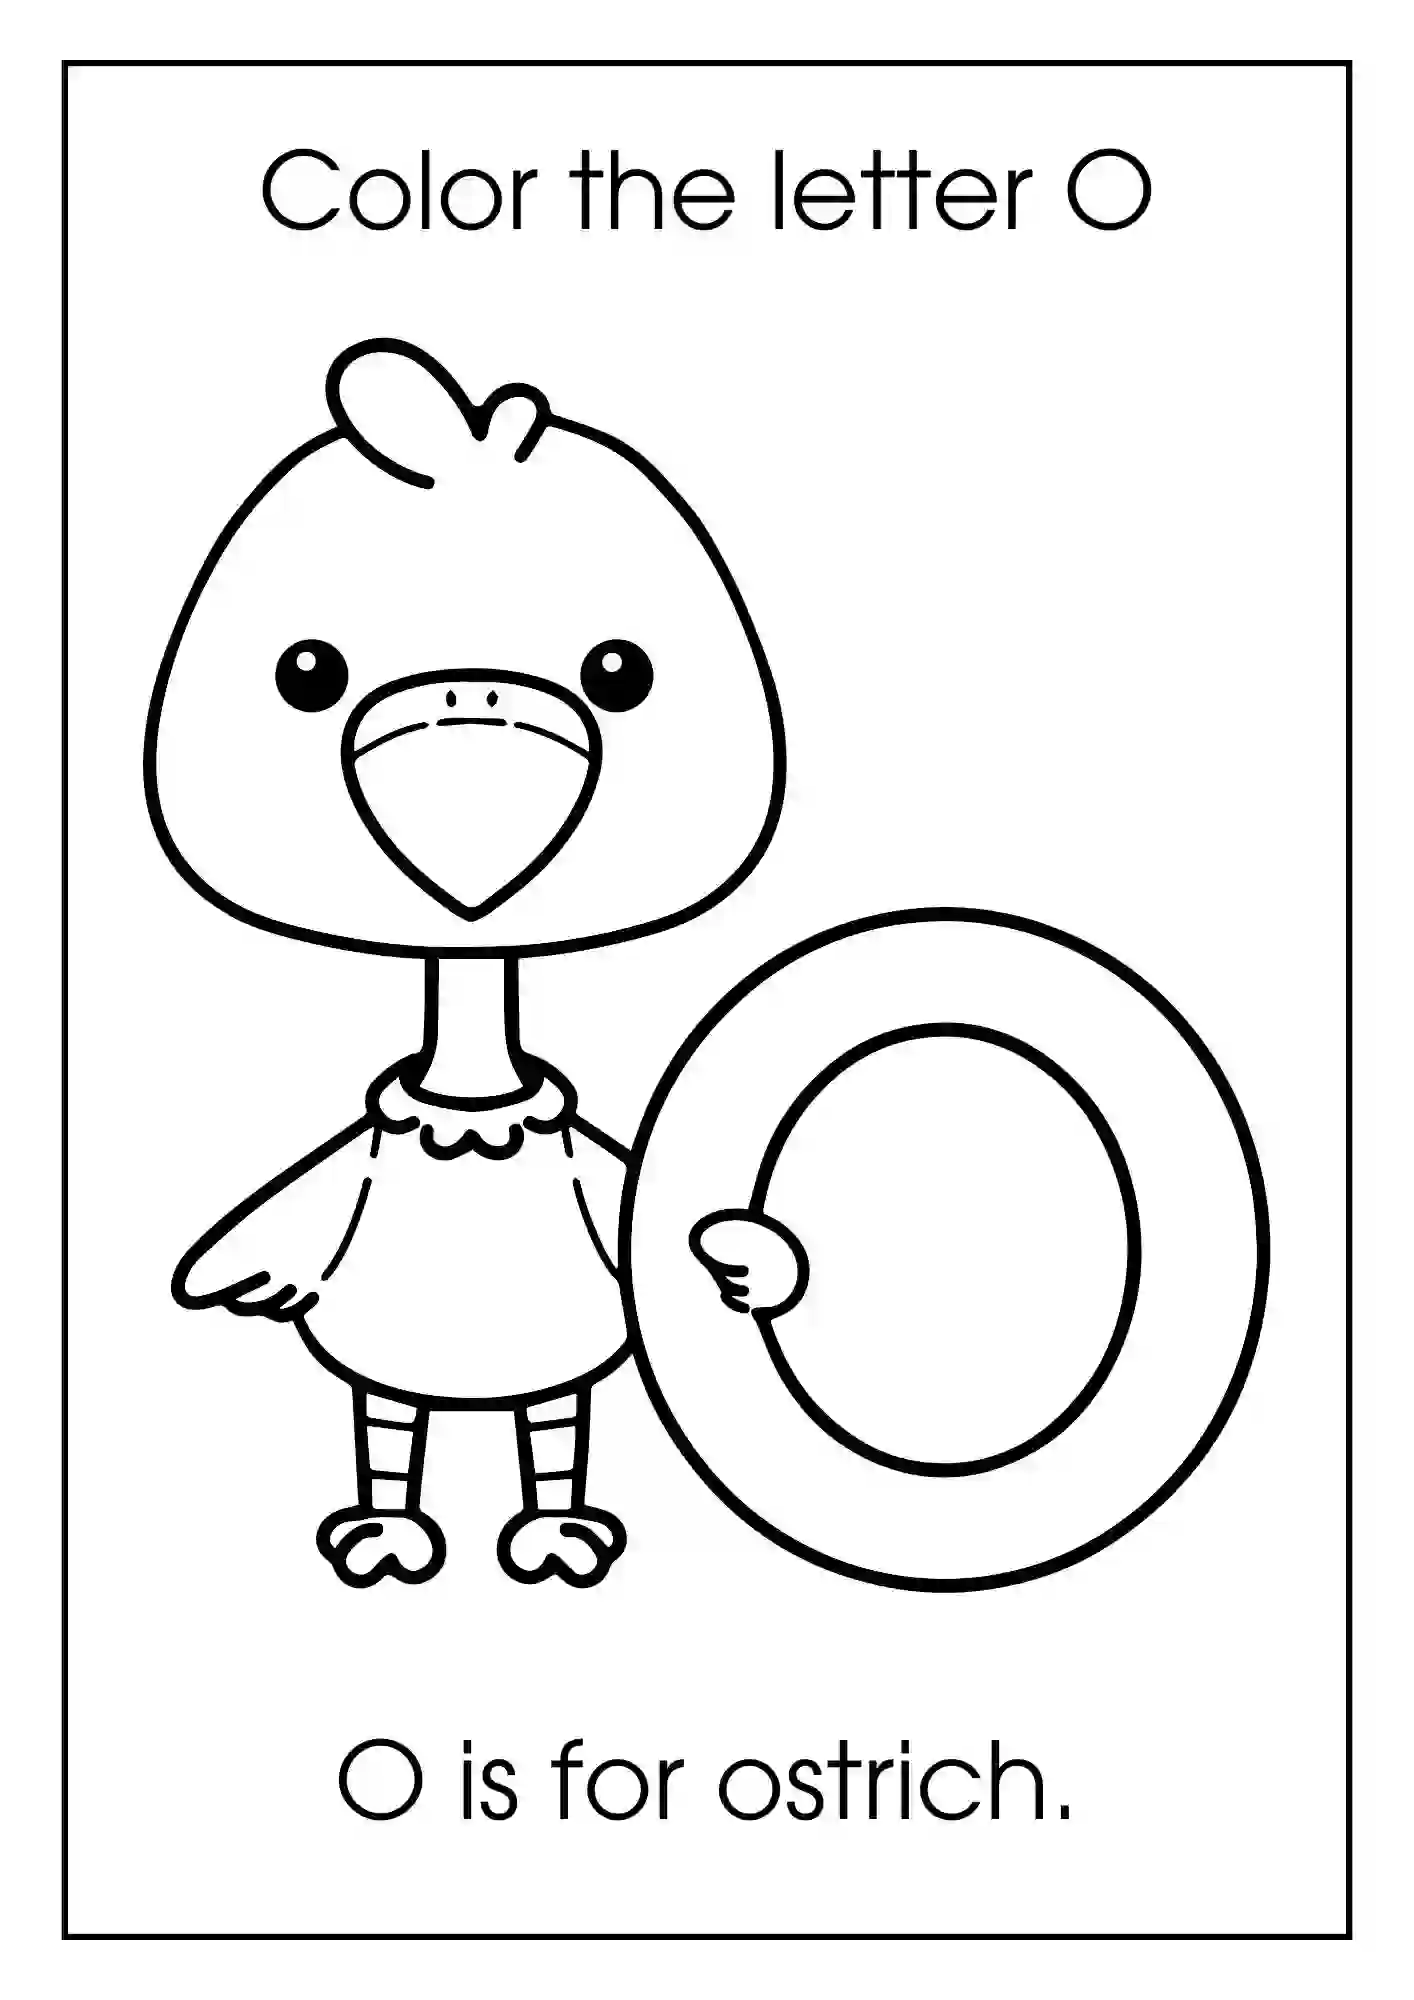 Animal Alphabet Coloring Worksheets For Kindergarten (Letter o with ostrich)